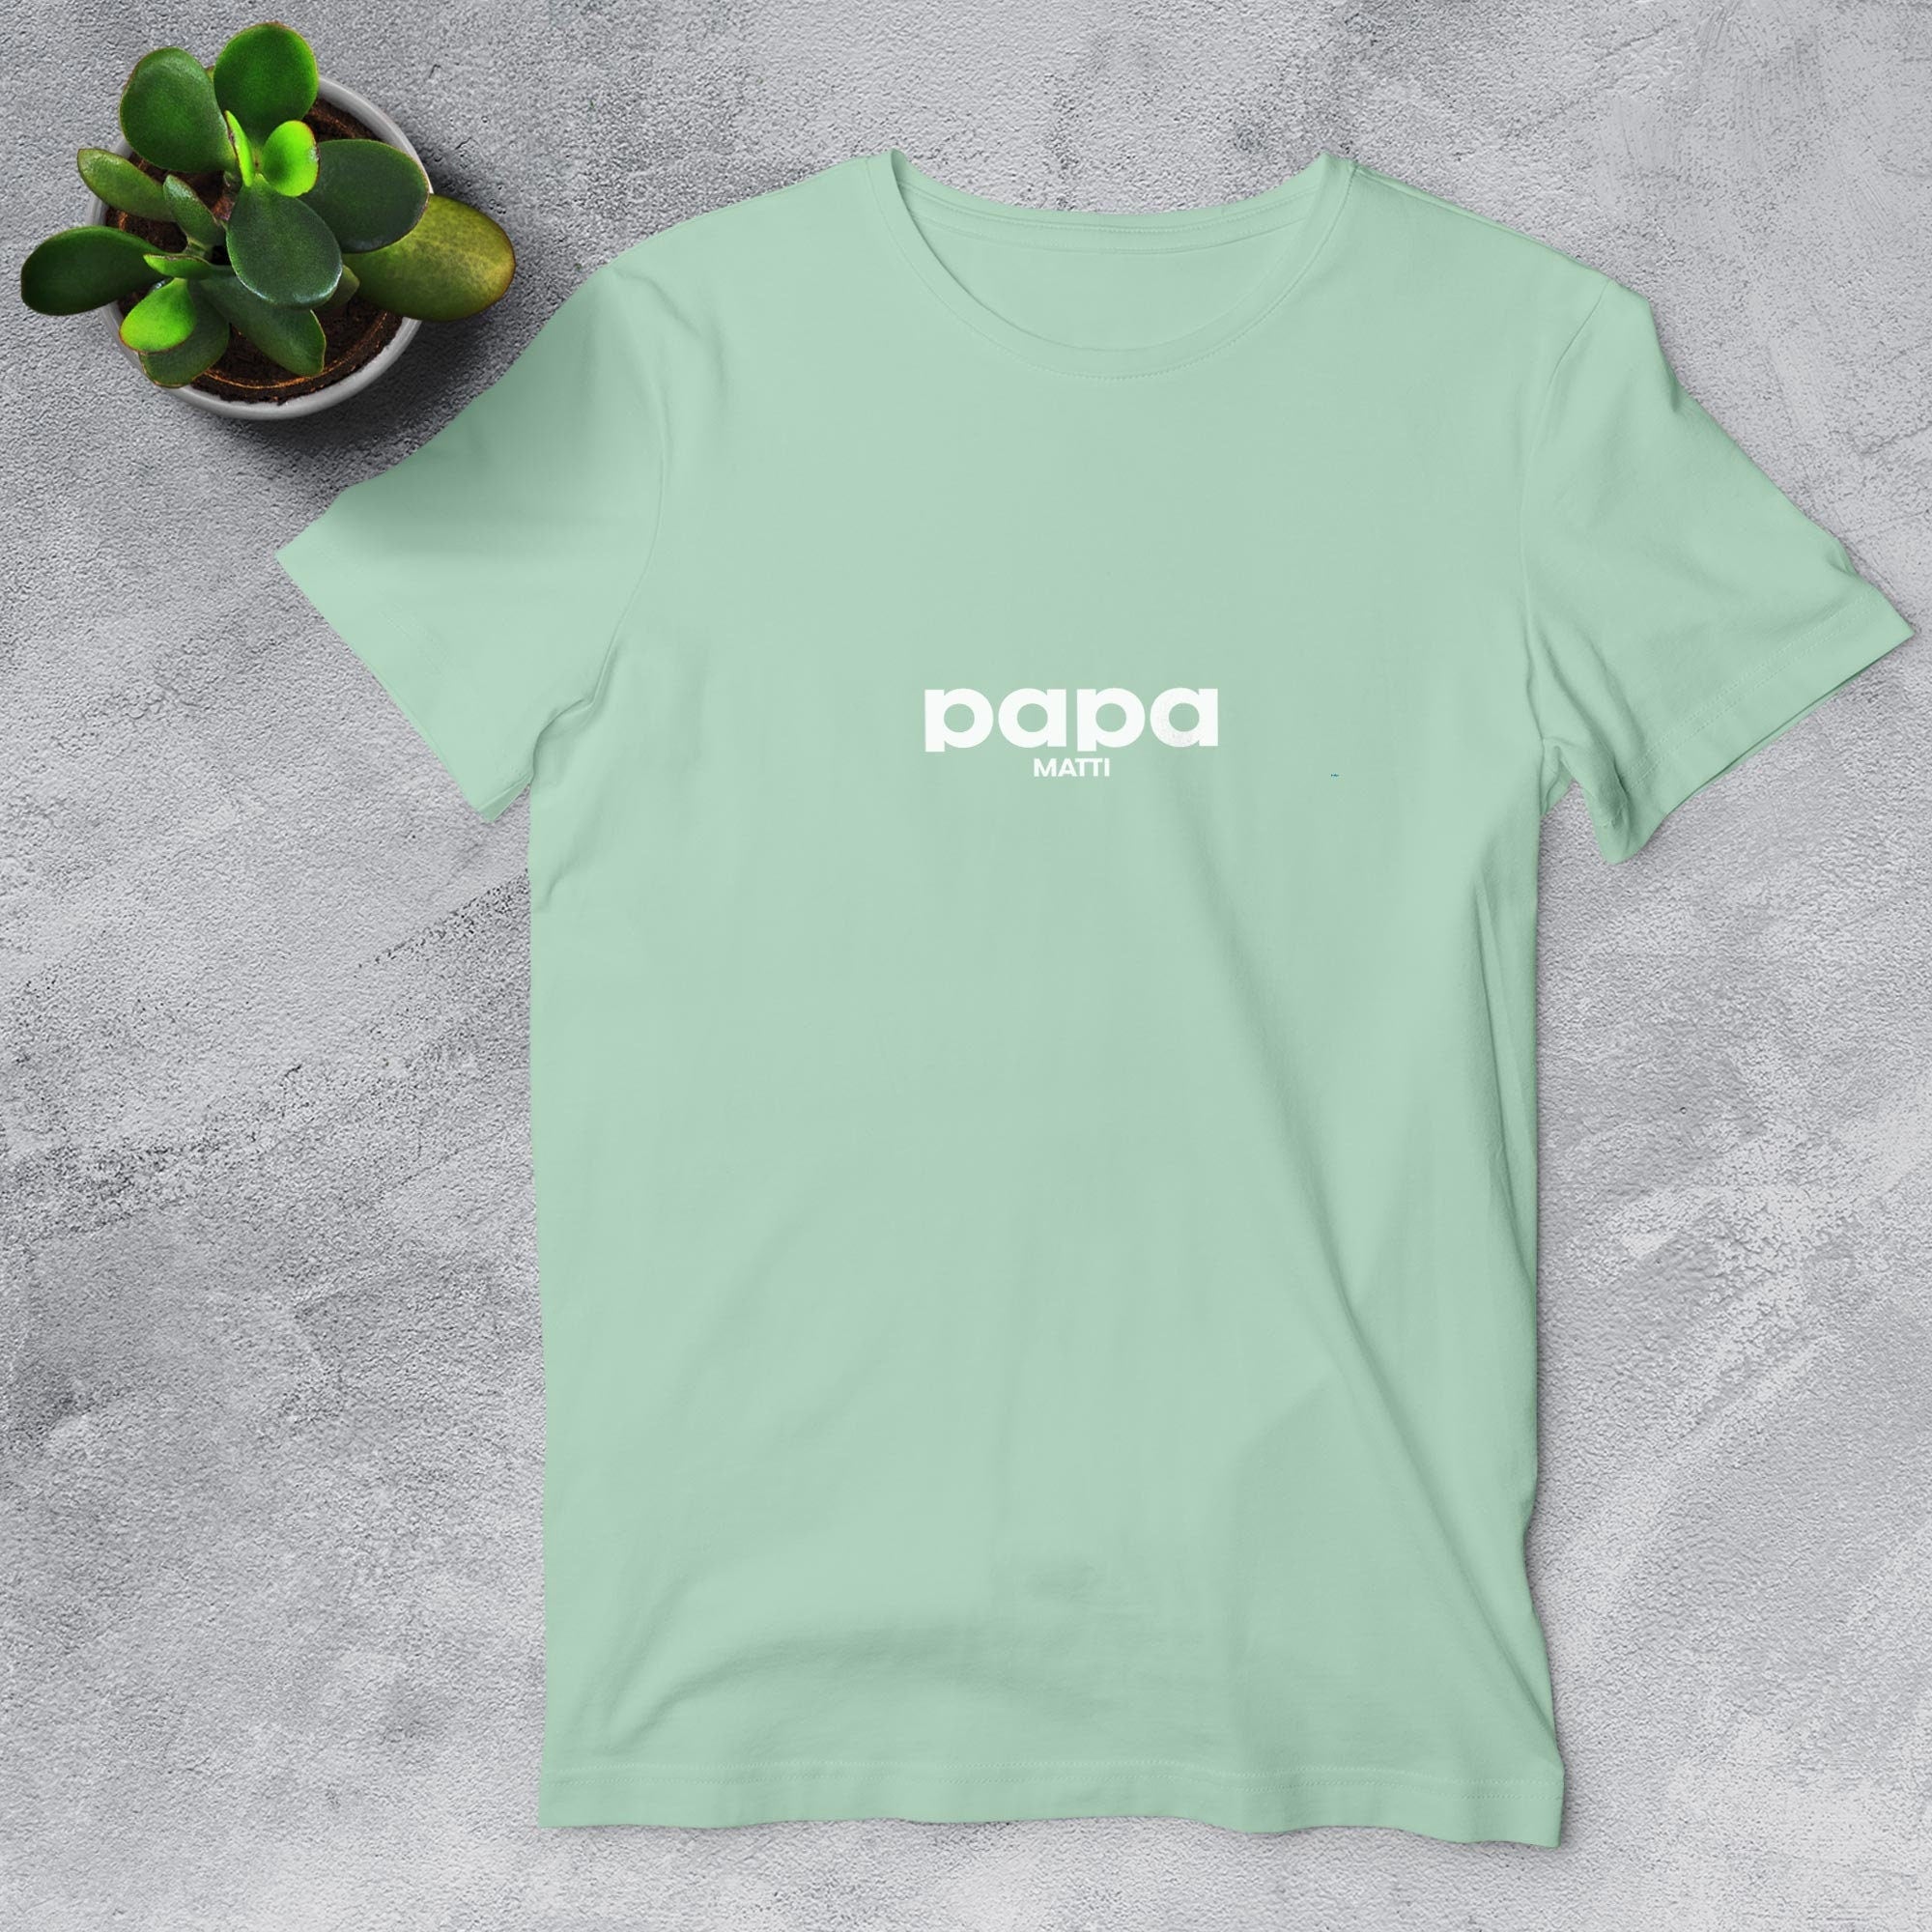 Papa T-Shirt Mint, personalisiert mit Namen